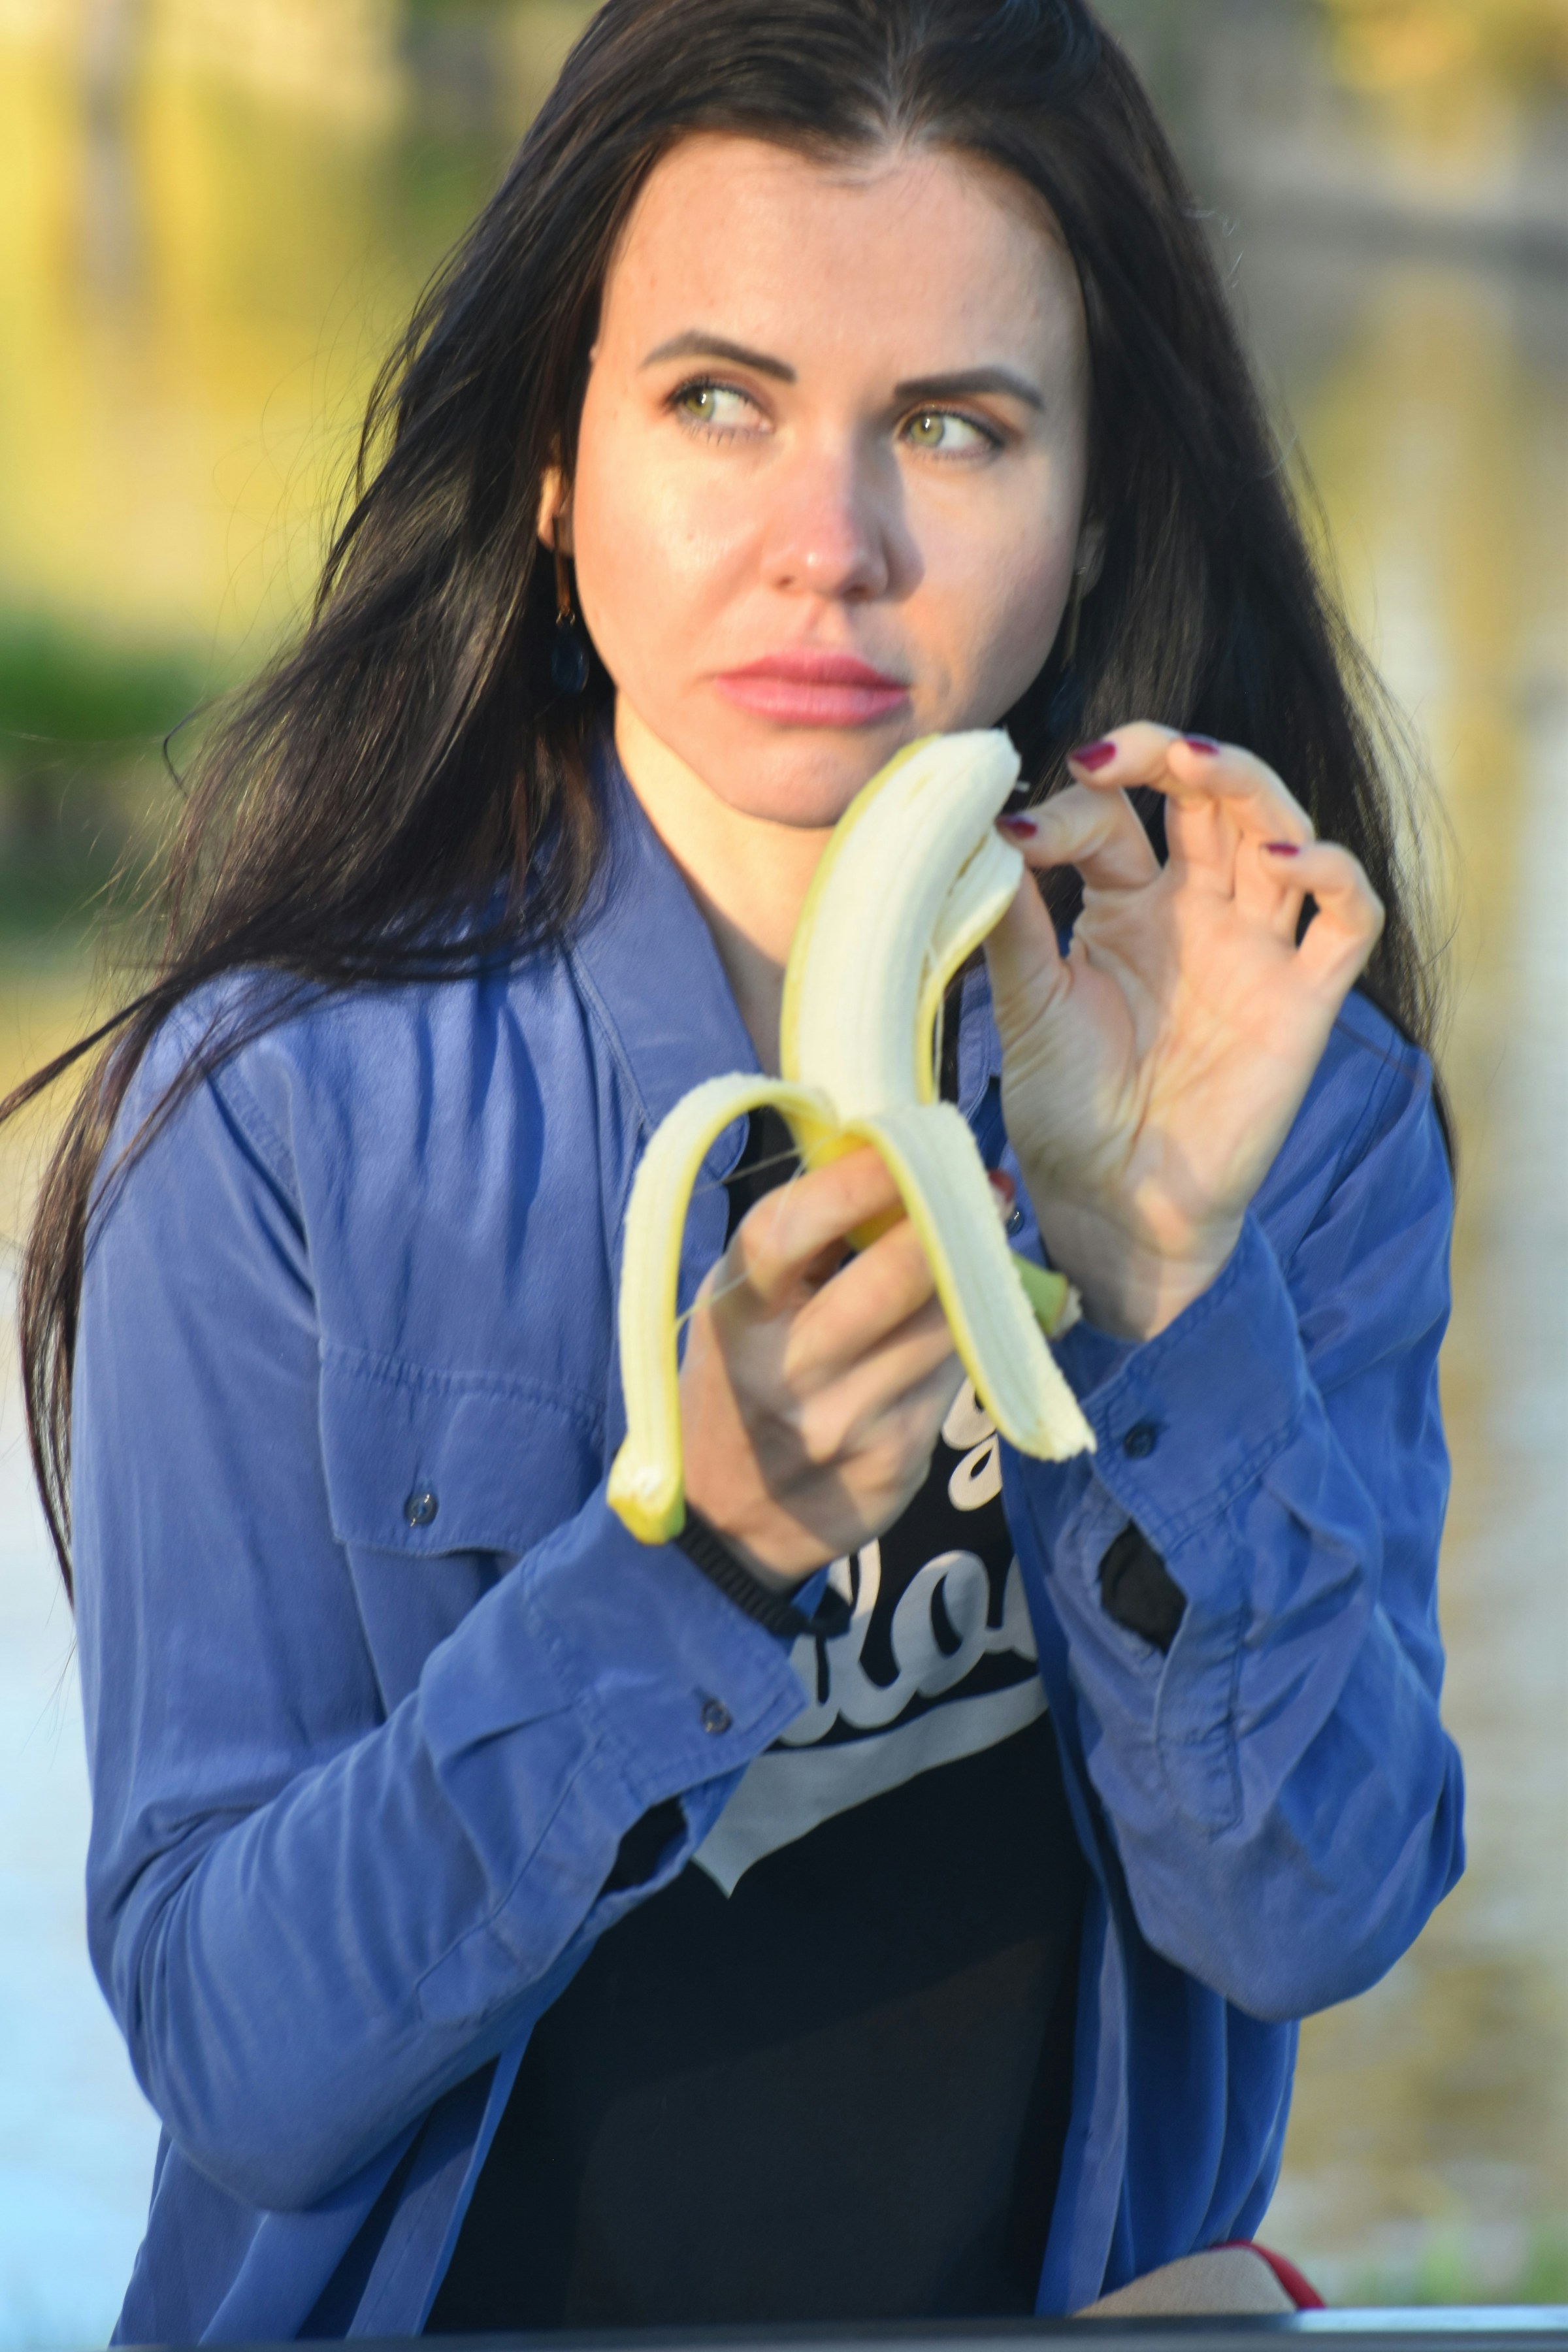 A woman eating a banana | Source: Unsplash